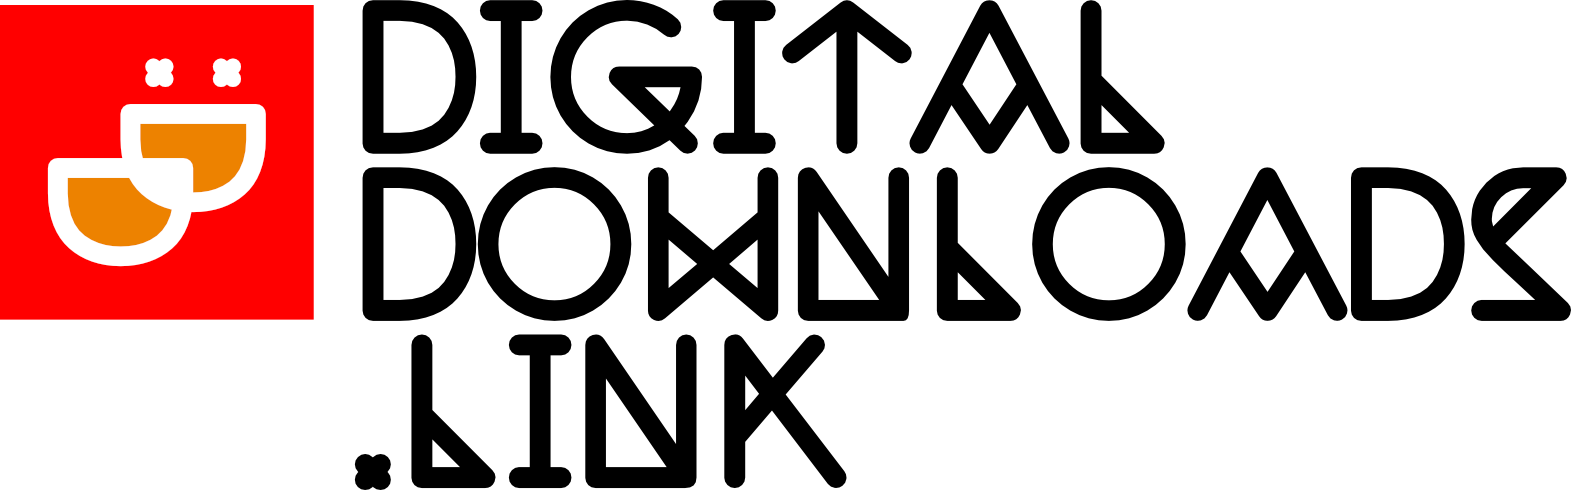 digital downloads logo